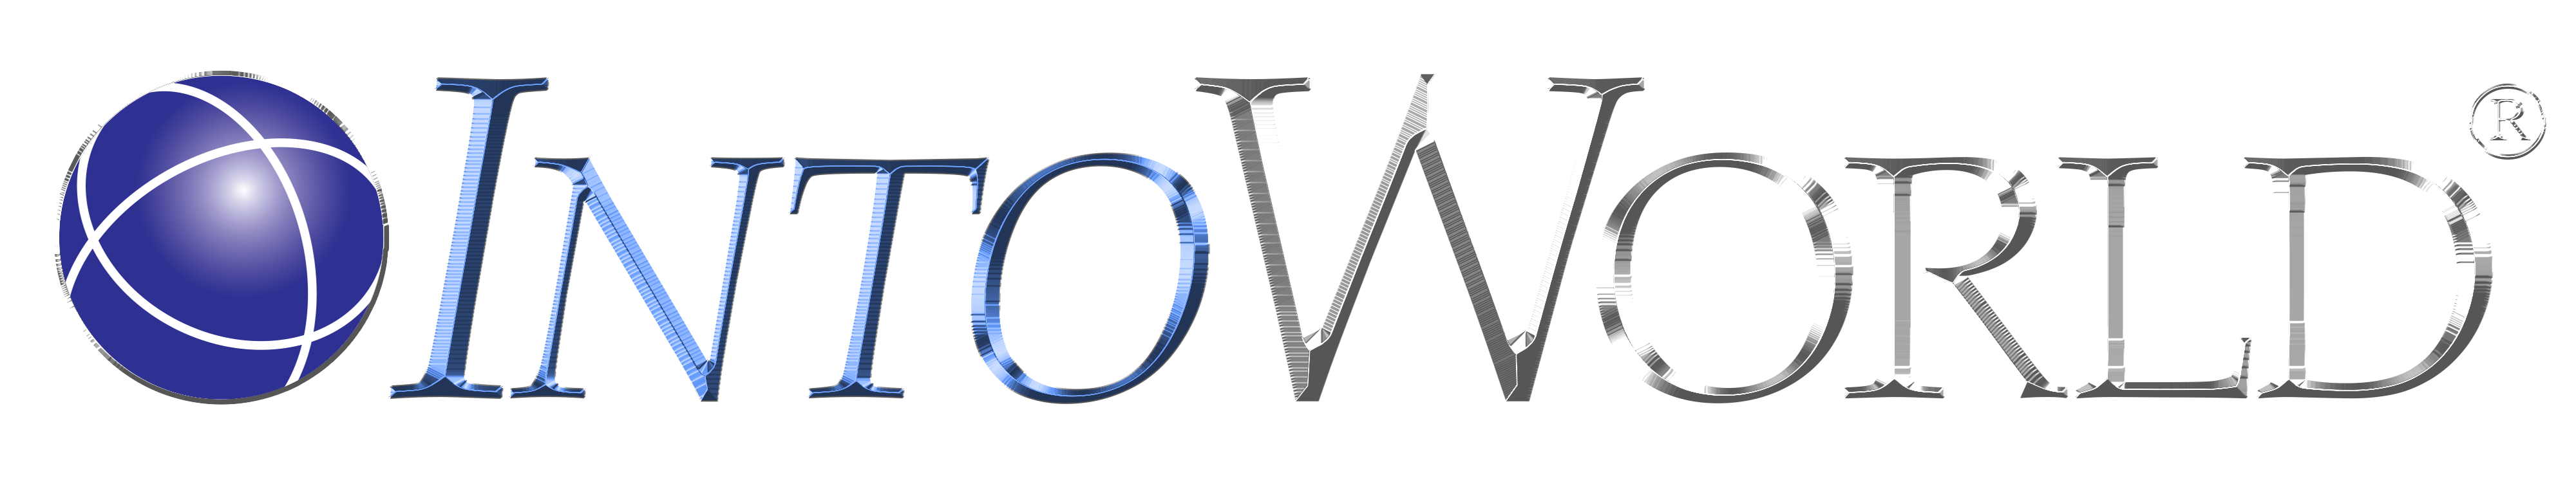 IntoWorld Logo